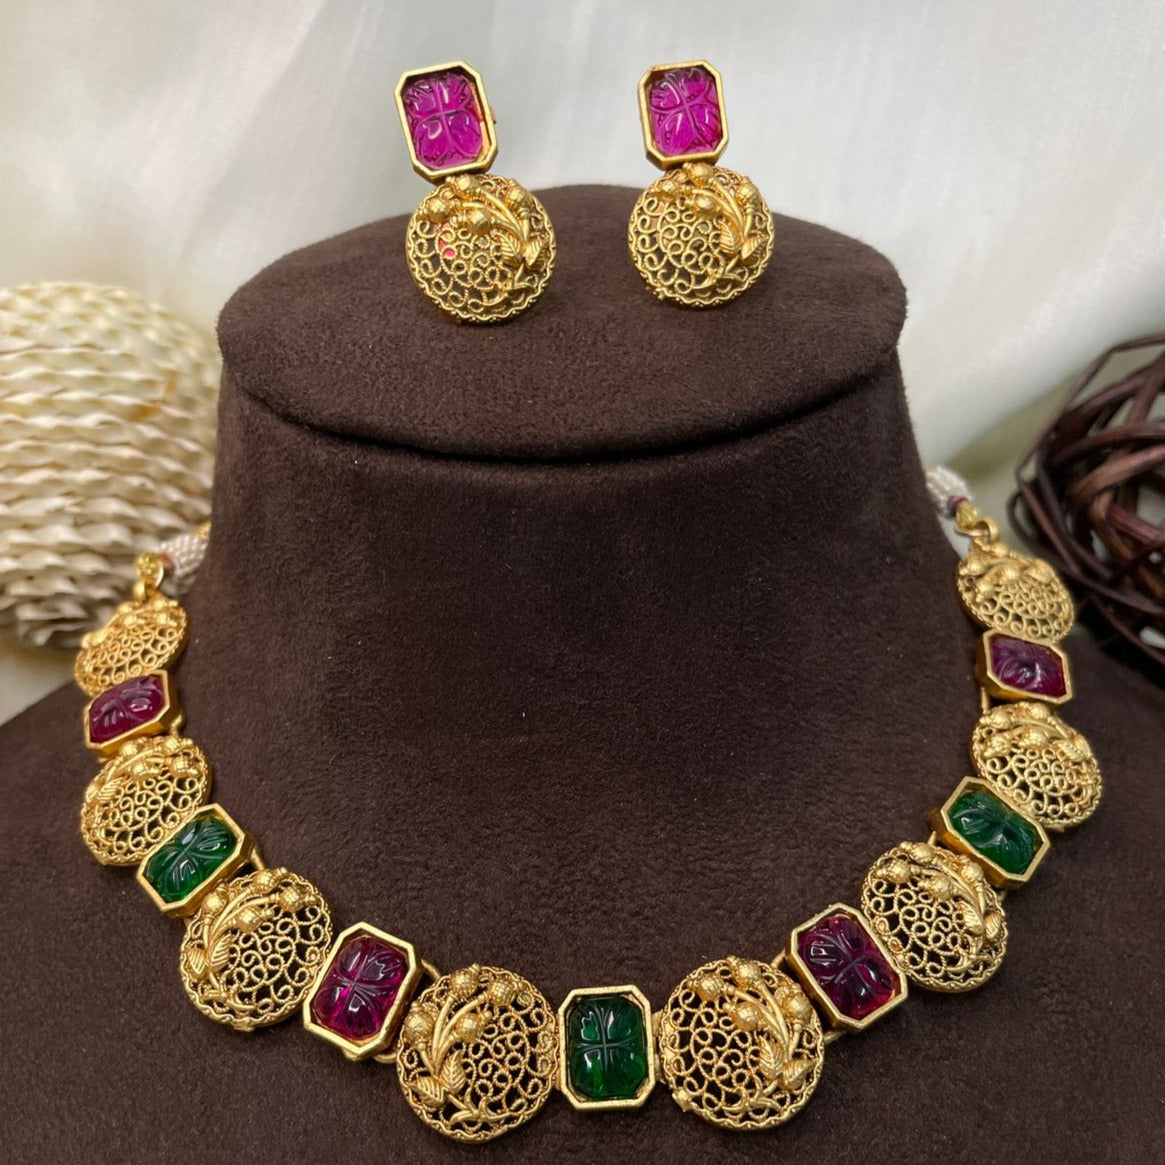 Premium Antique Gold Plated Floral Necklace